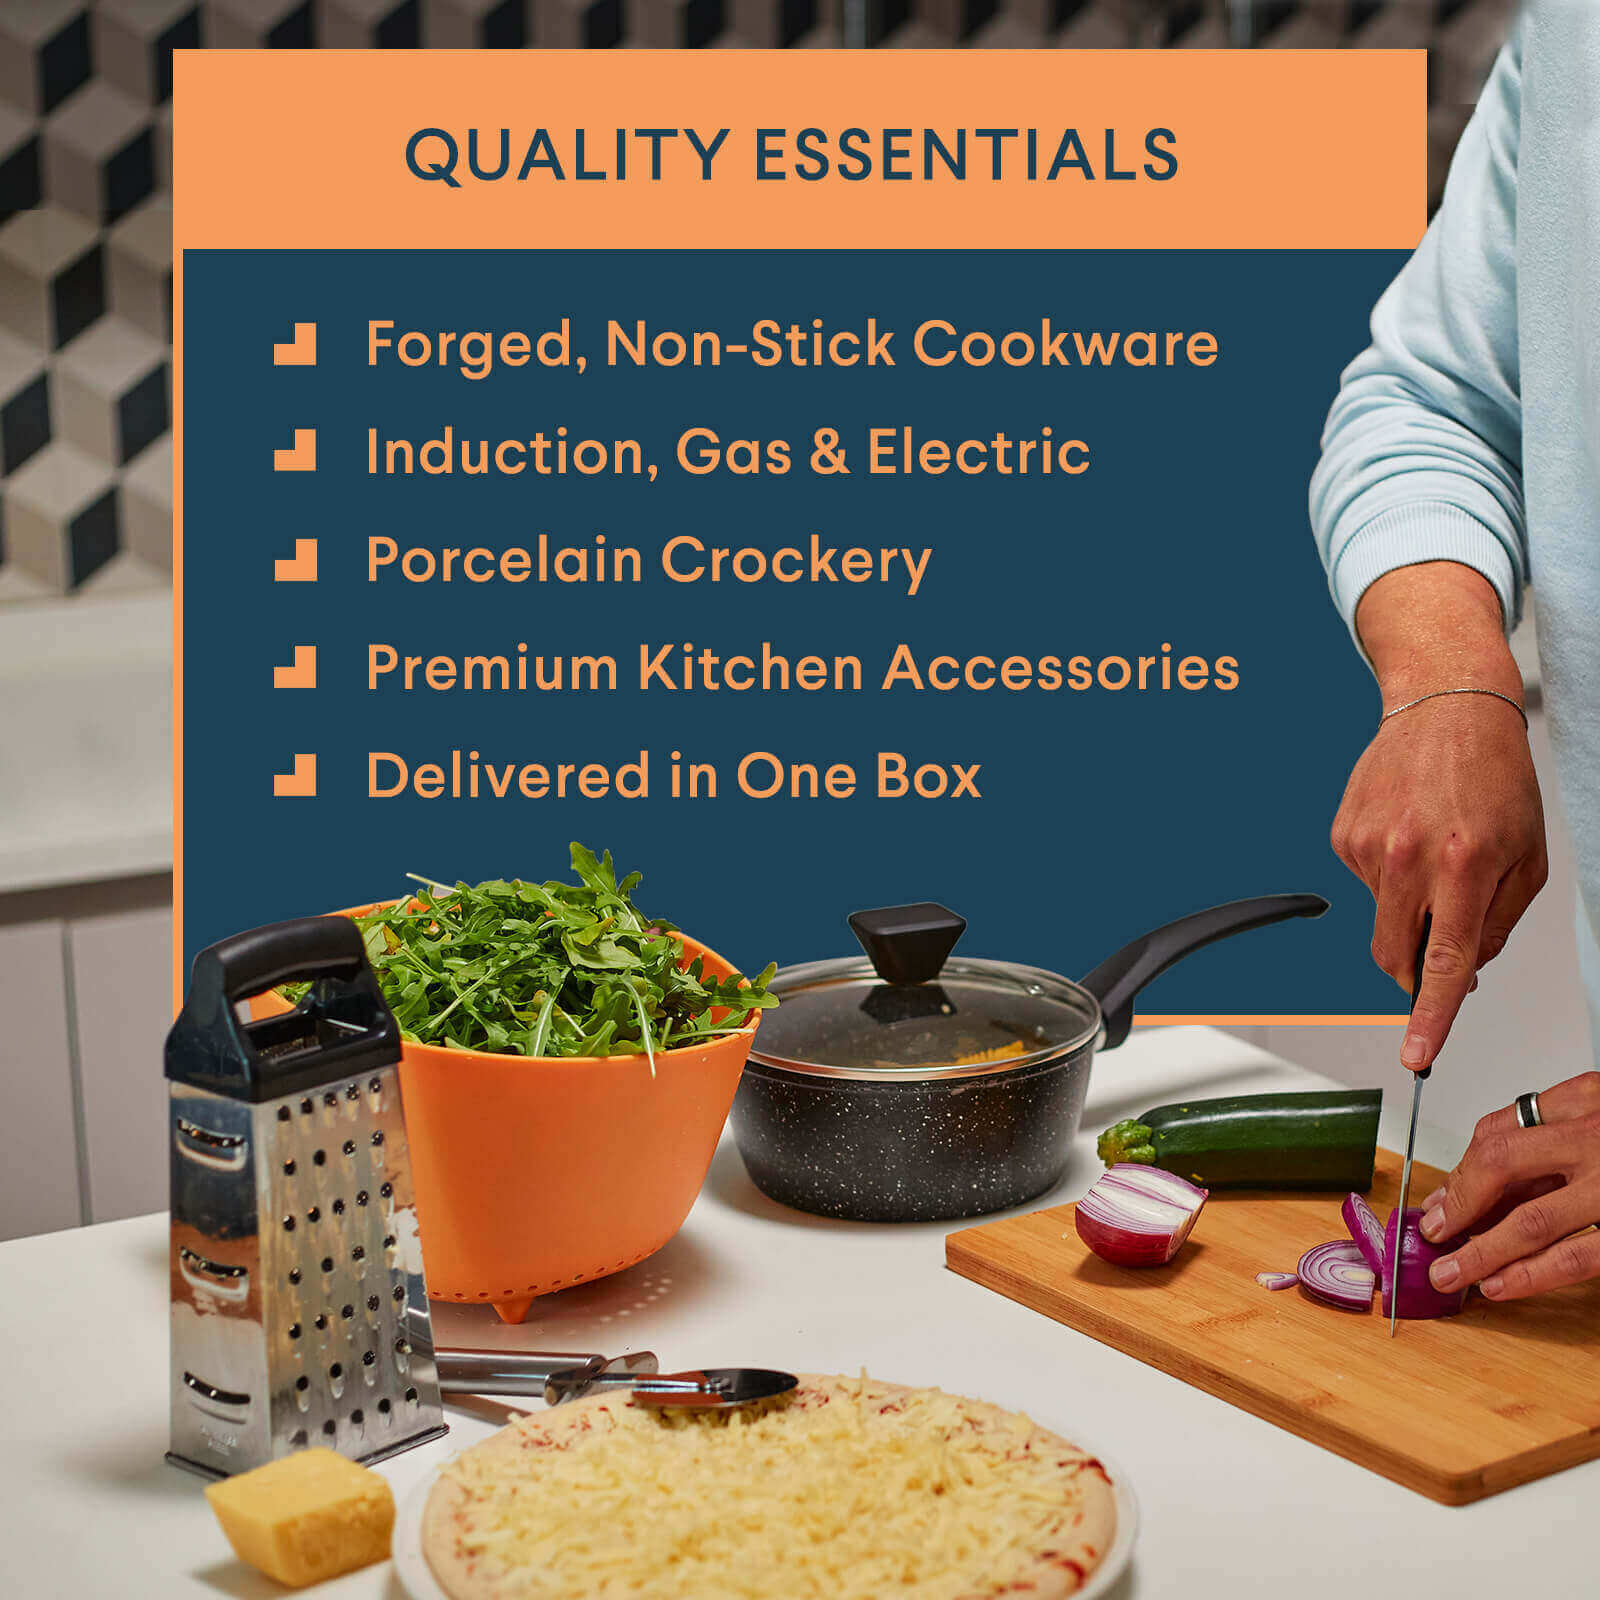  noah The Head Chef Premium Kitchen Starter Kit - Ideal For Home  Movers & Students - Full Kitchen Equipment (Cream Pan Set & Midnight Dinner  Set): Home & Kitchen